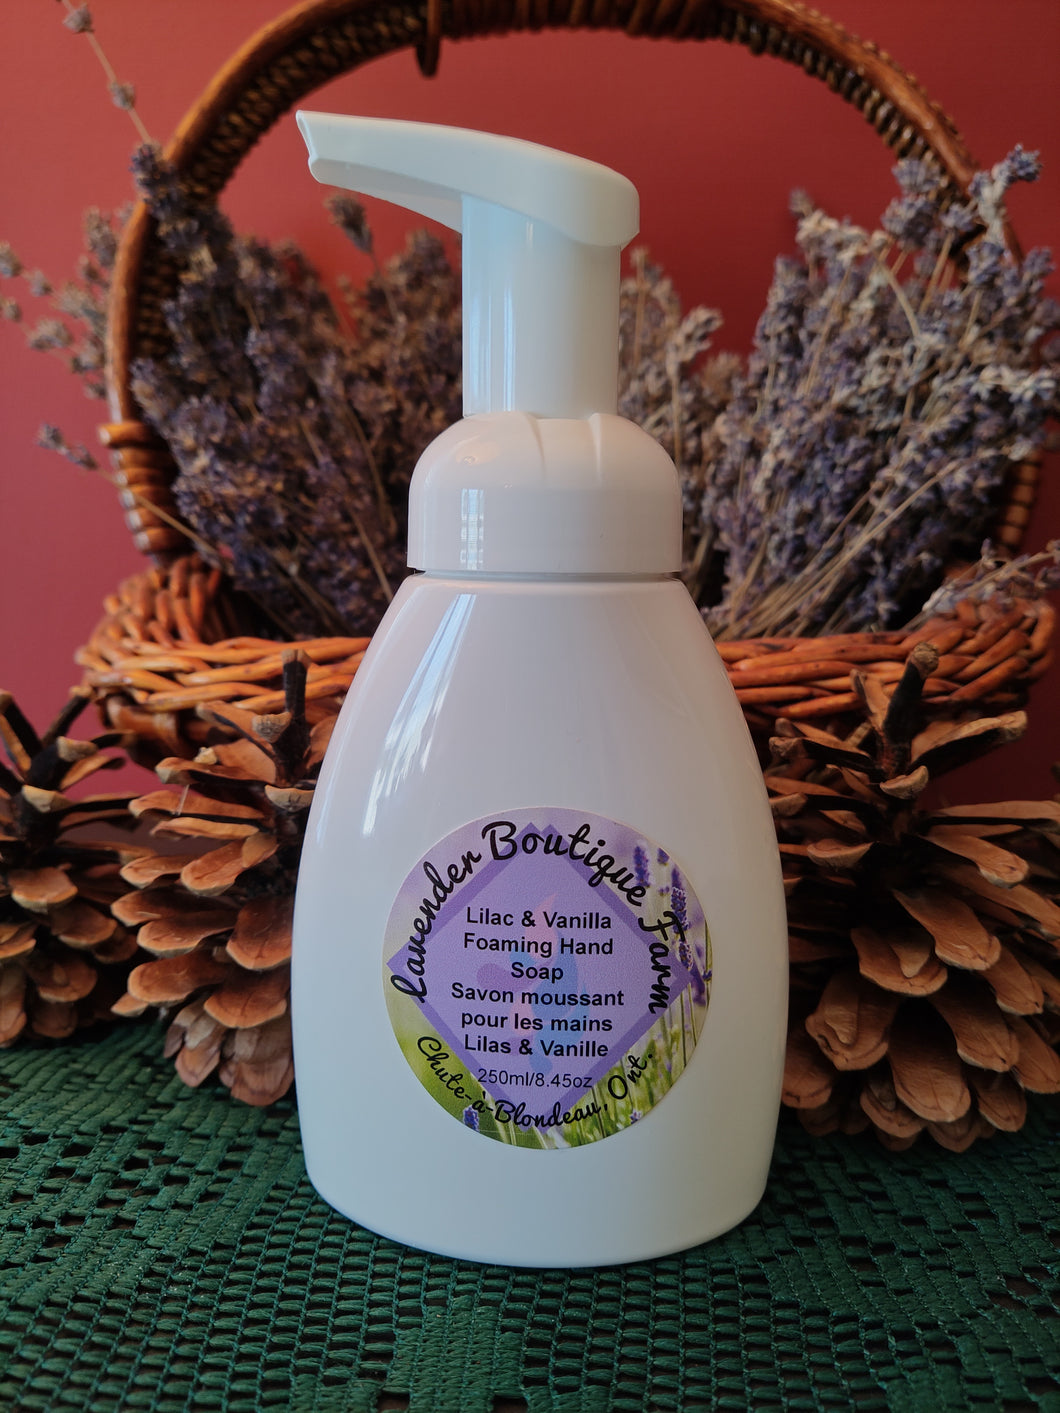 Lilac & Vanilla Foaming Hand Soap